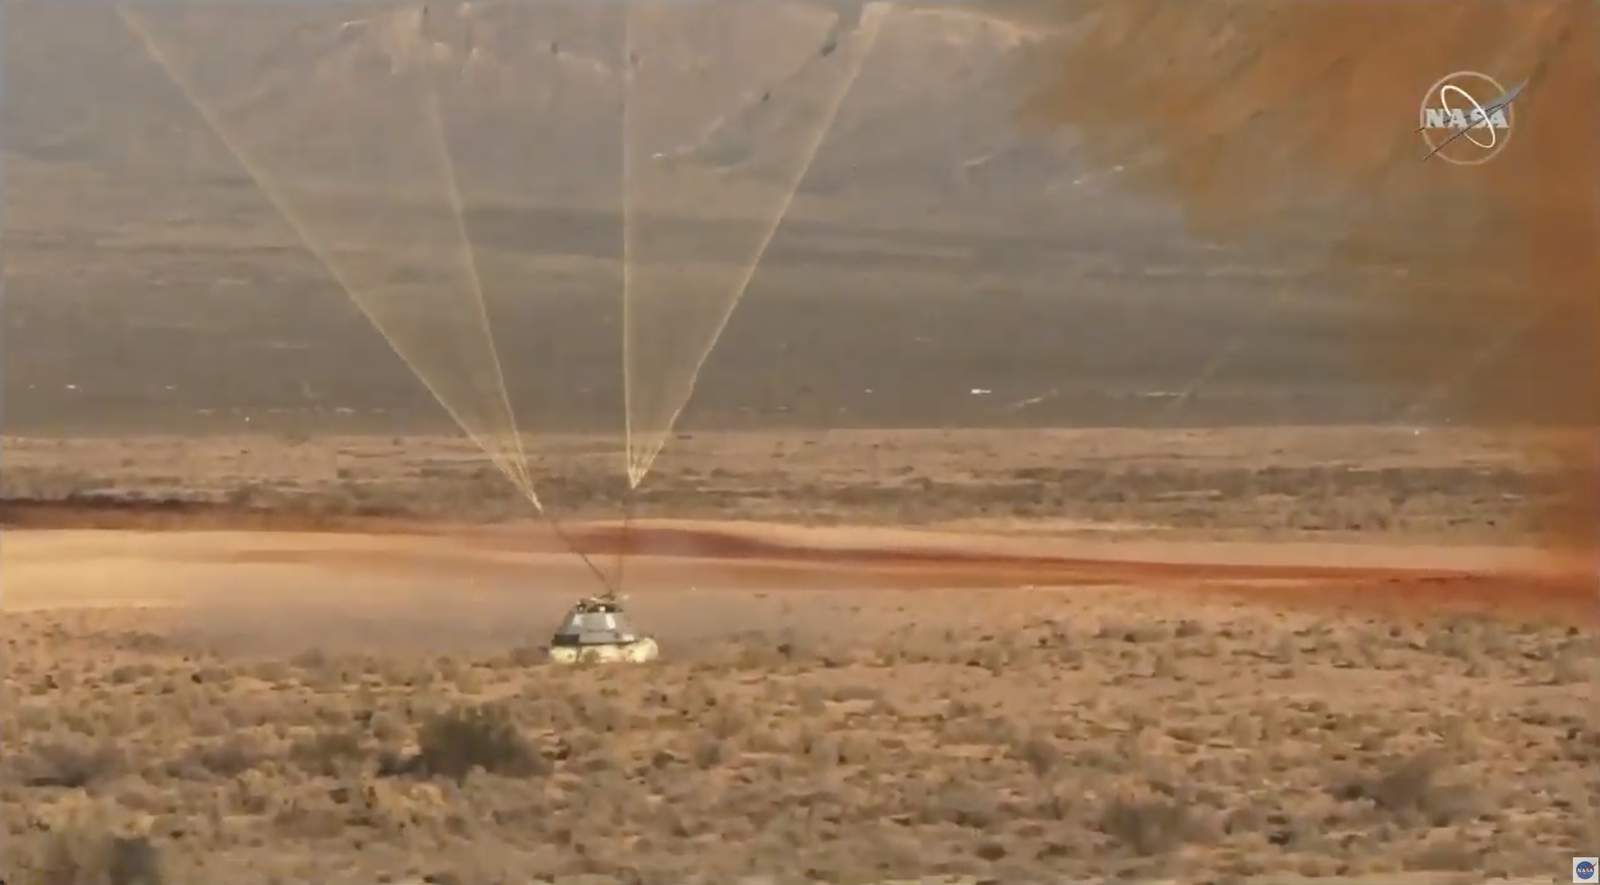 Boeing crew capsule completes major flight test in desert